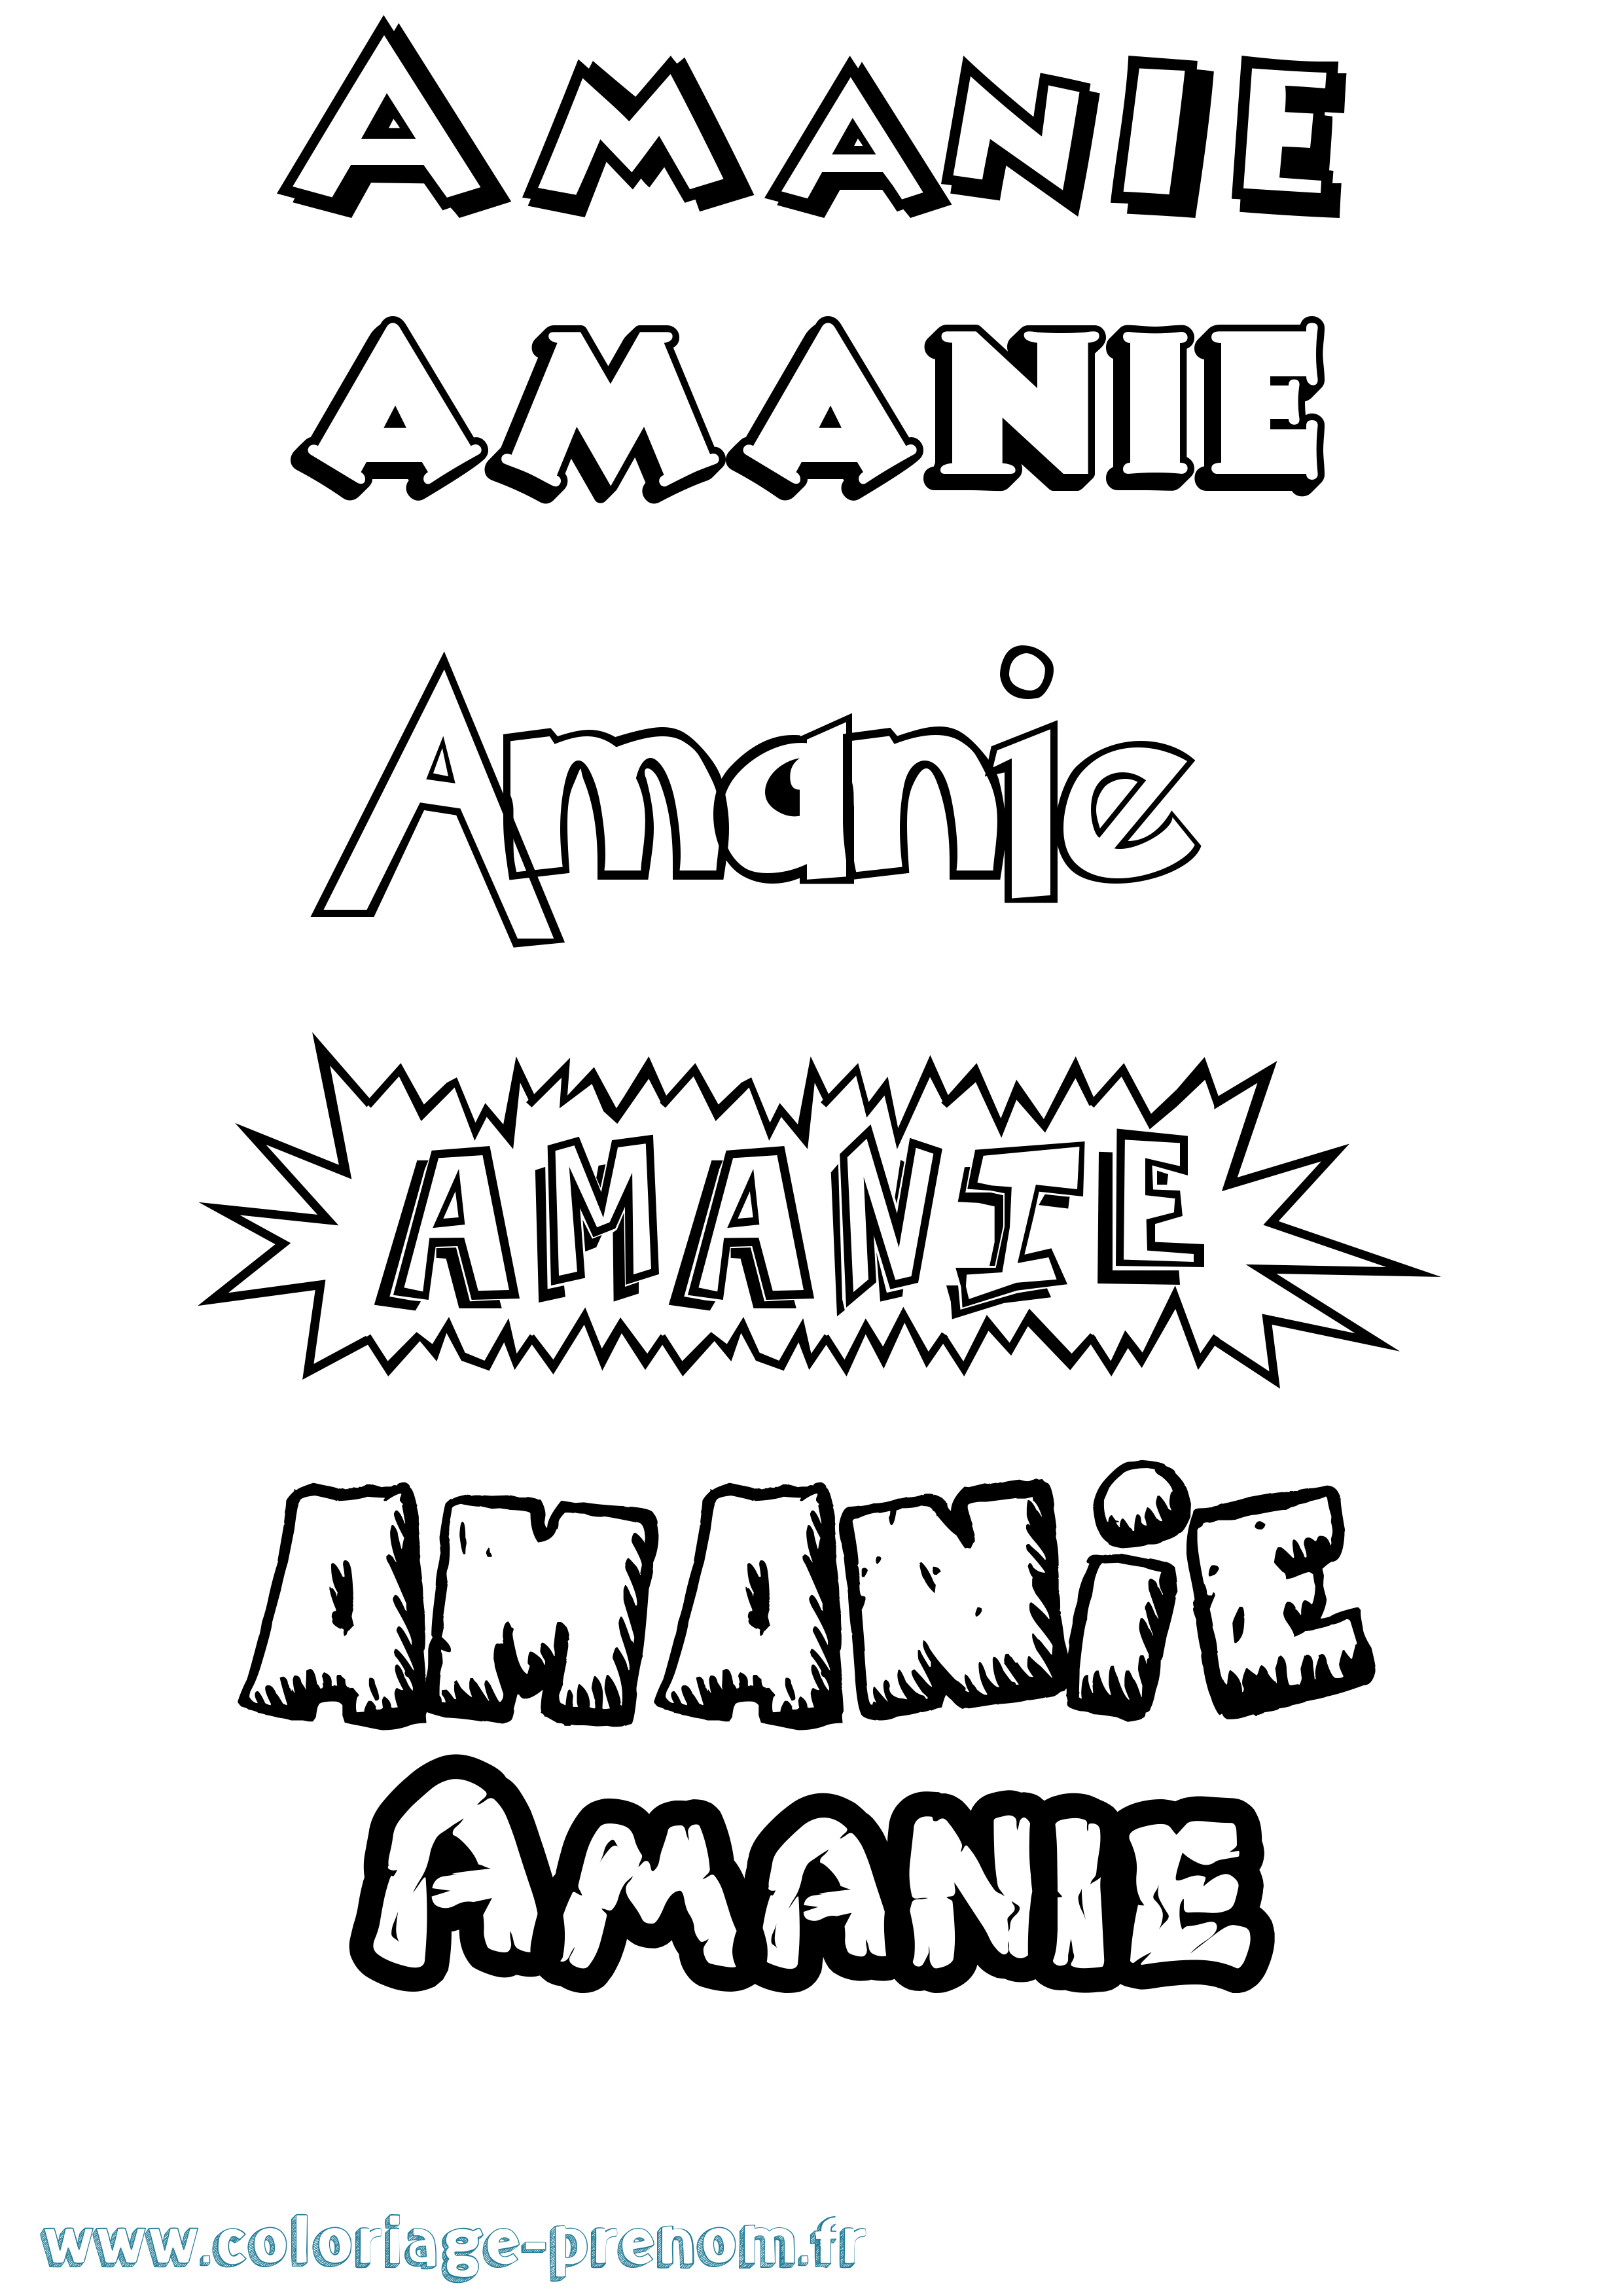 Coloriage prénom Amanie Dessin Animé